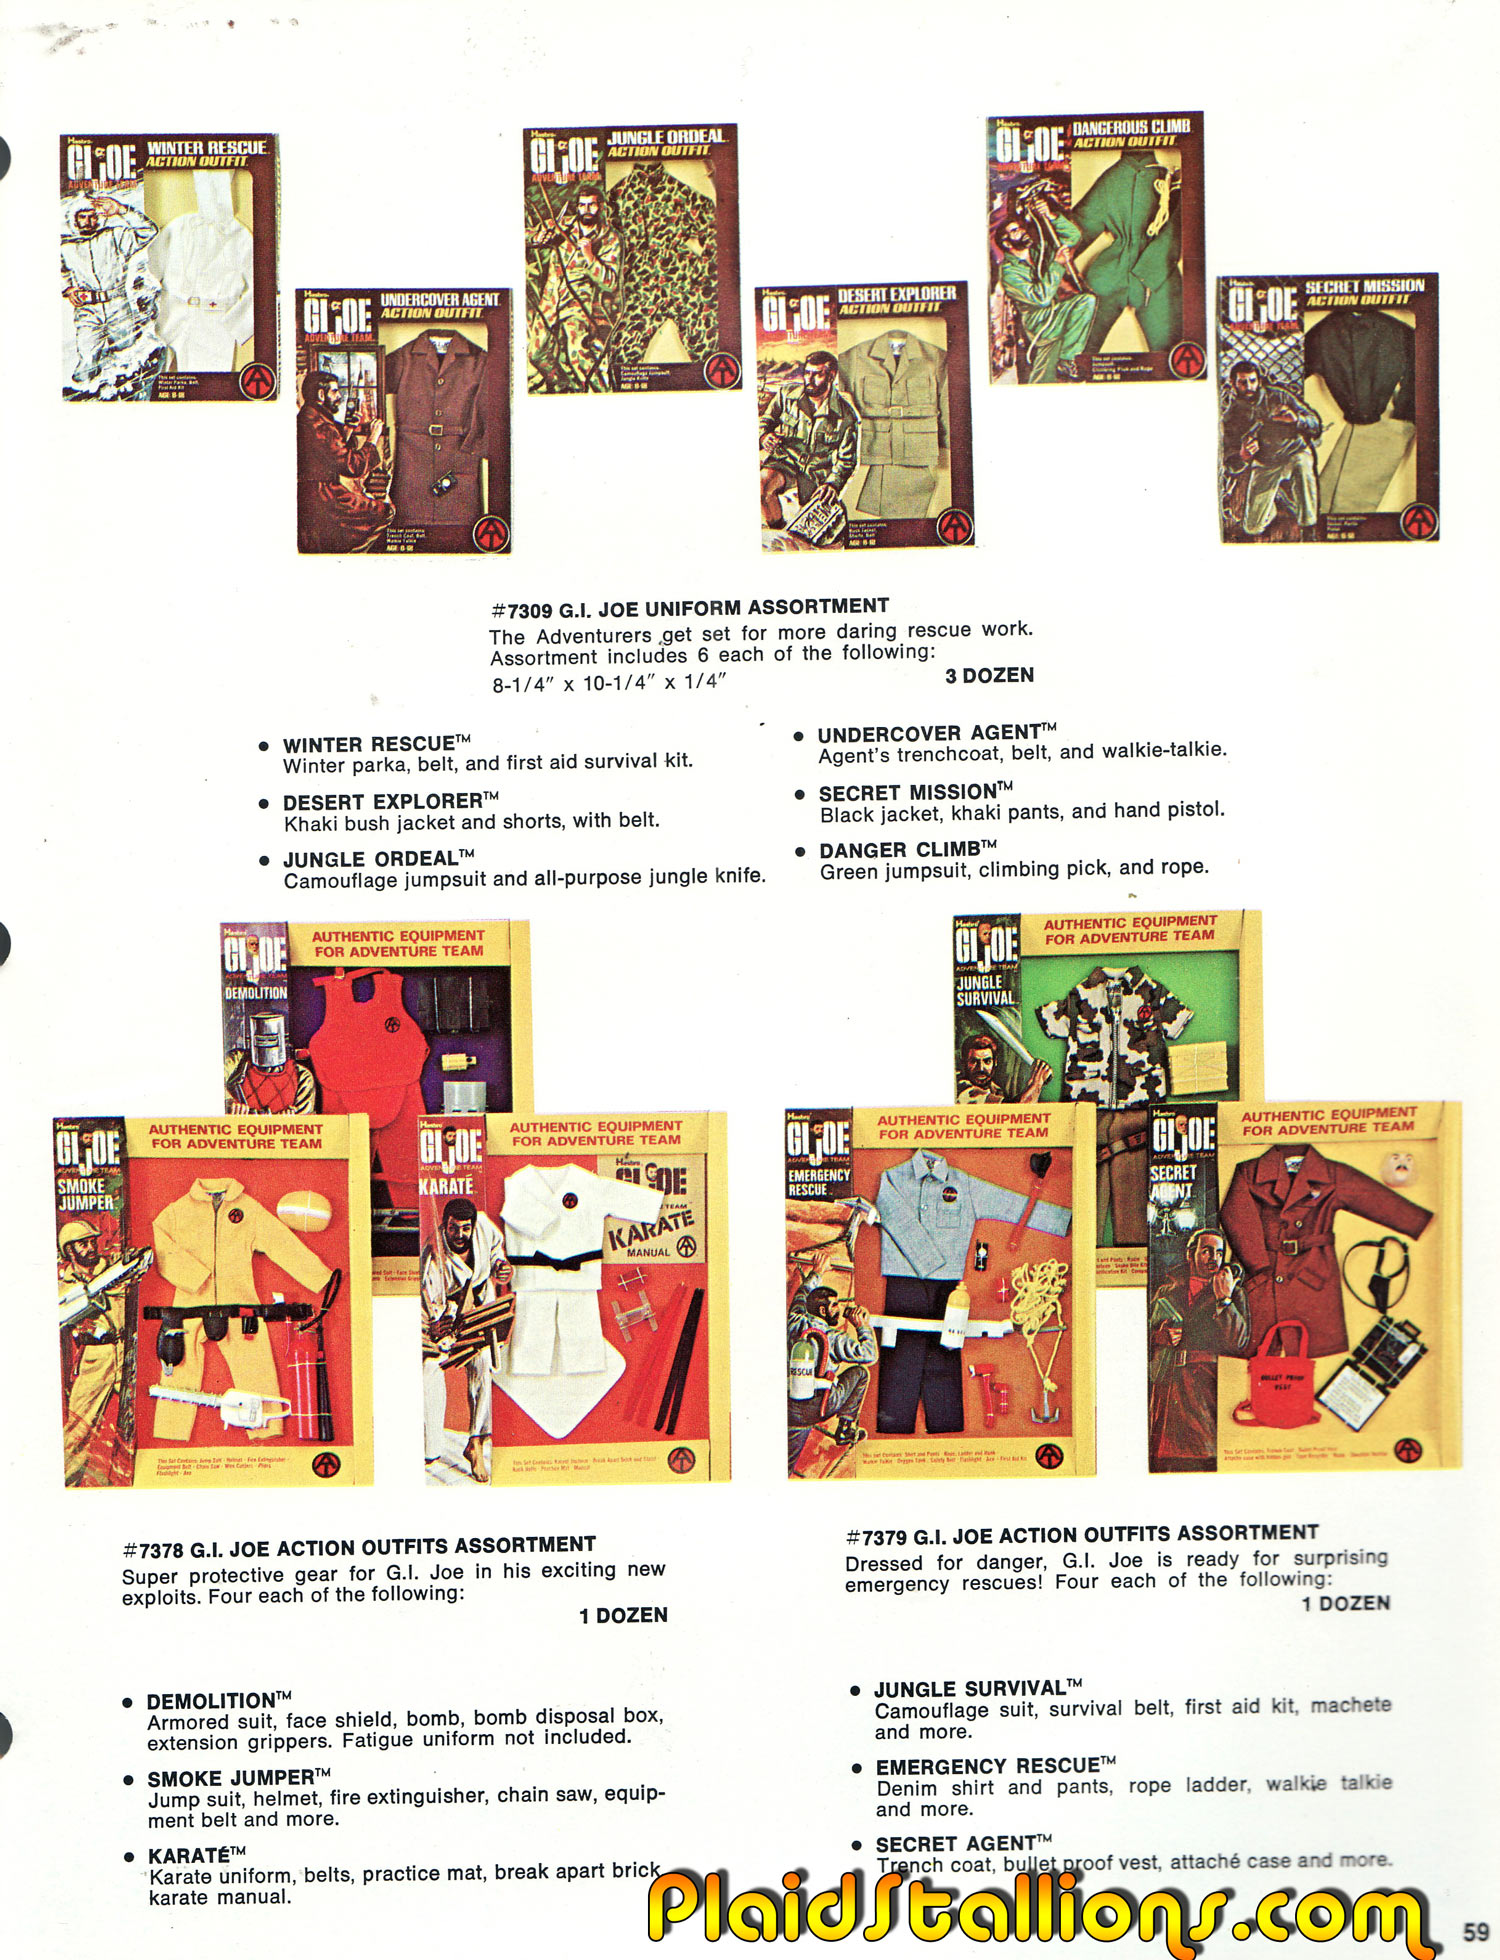 Hasbro GI Joe Catalog 1973